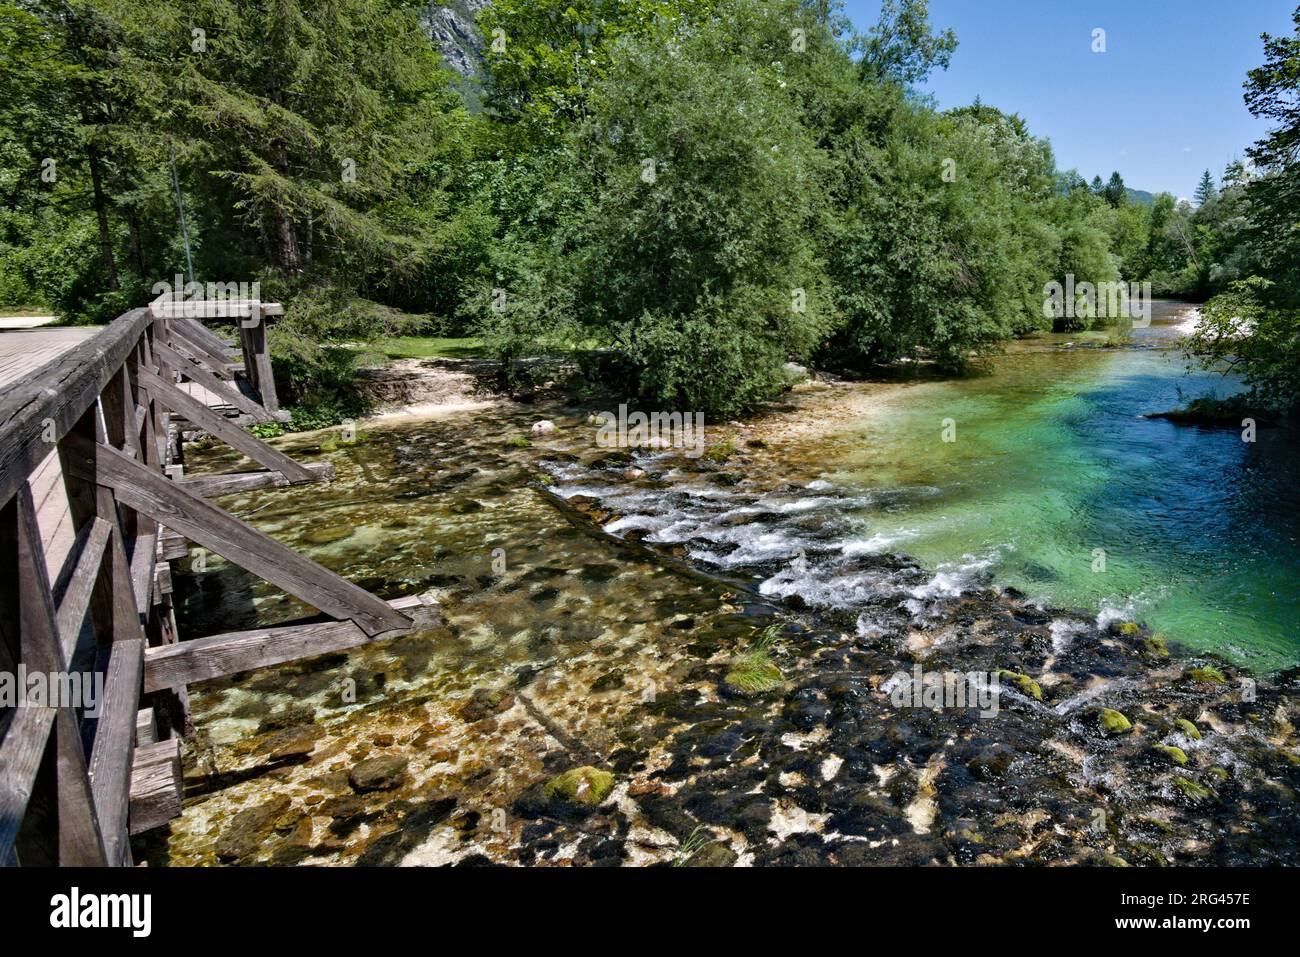 Sava Bohinjka river from the bridge in Ukanc. Tributary of Lake Bohinj in Triglav national park in Slovenia. Absolutely pure mountain water. Stock Photo